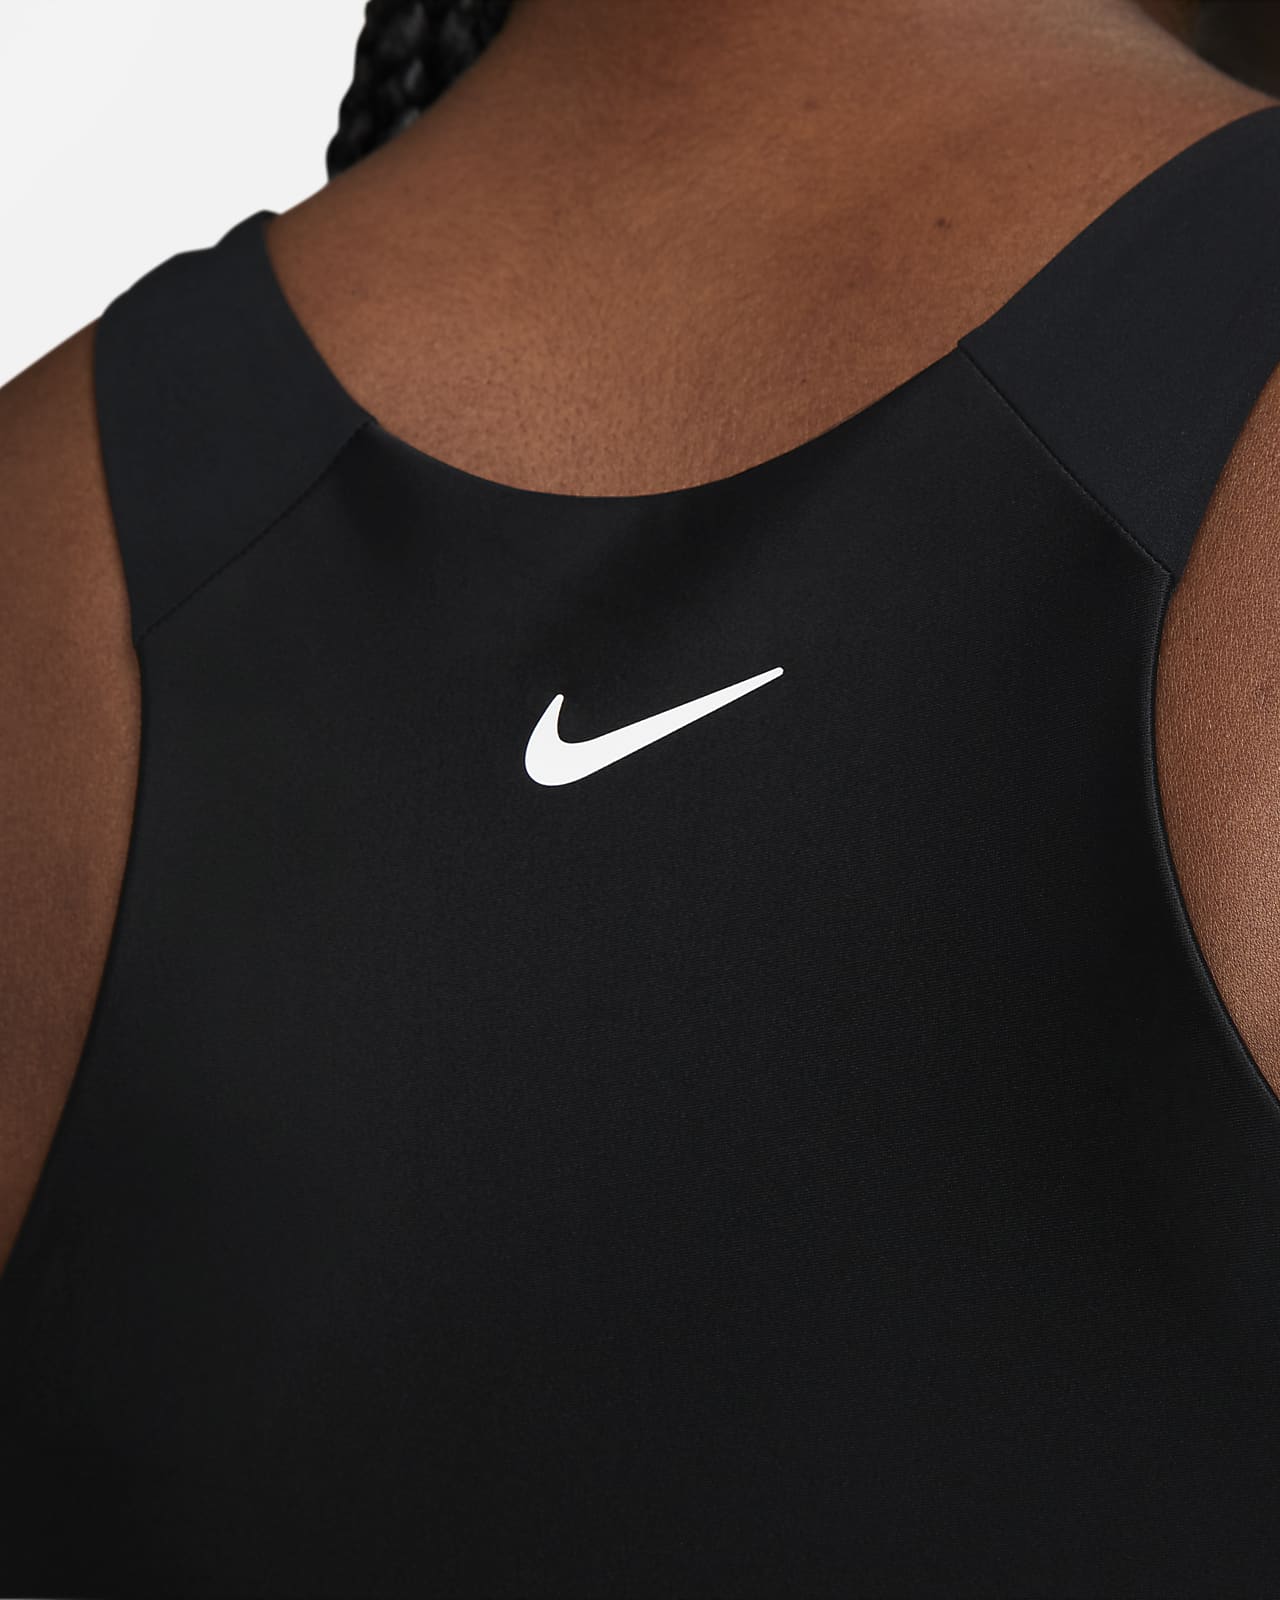 Nike Dri Fit Racer Back Tank Top Black Stripe Design Women's Size Small